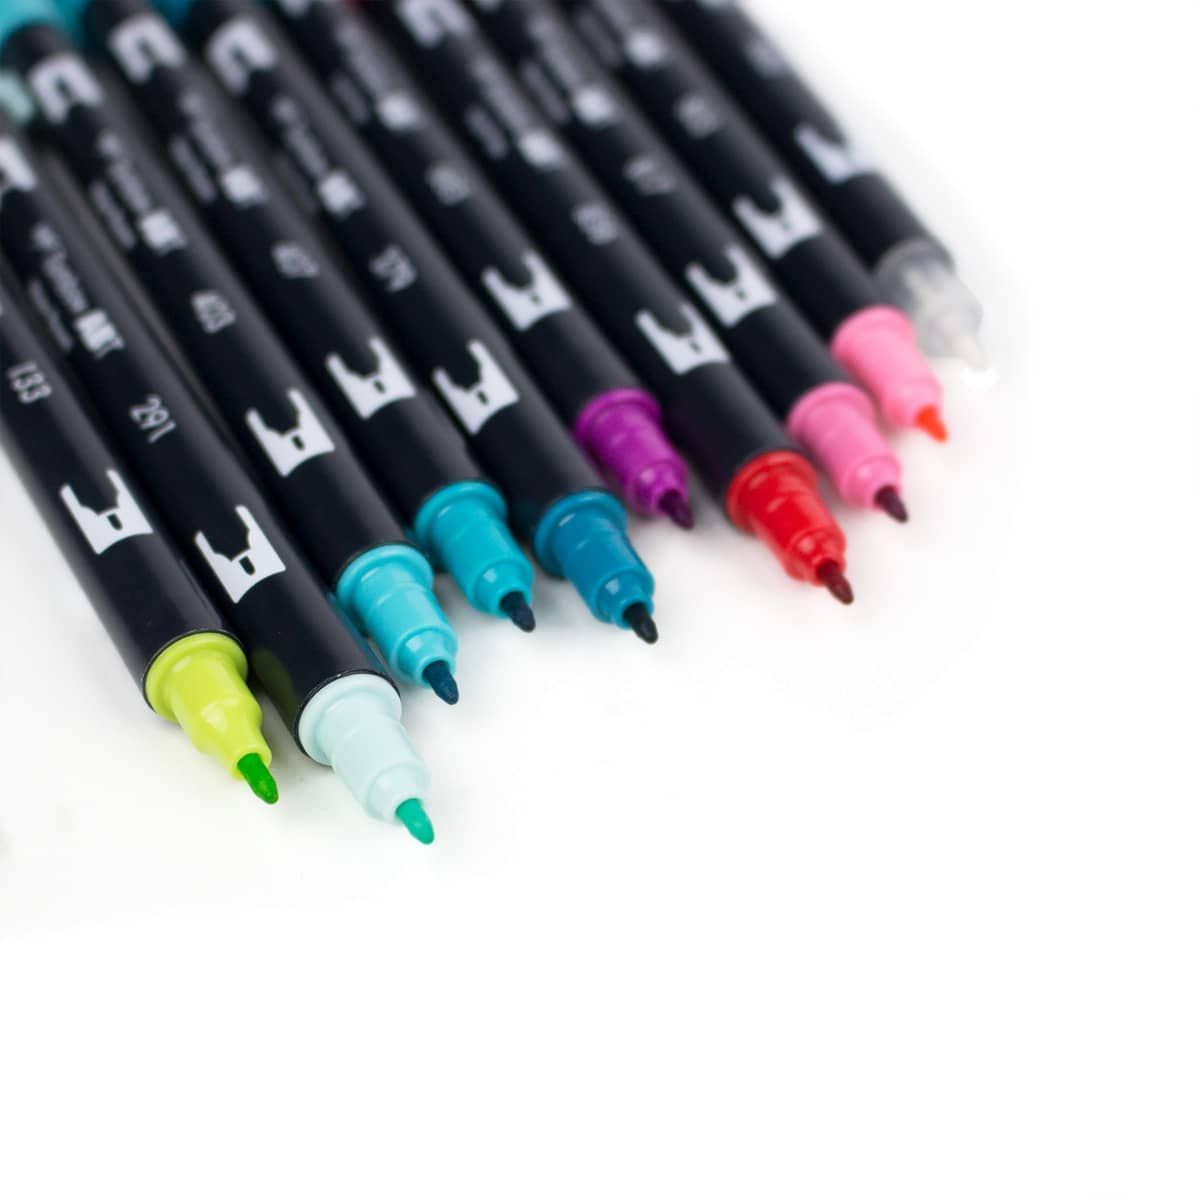 Tombow Dual Brush Pen Sets – Jerrys Artist Outlet